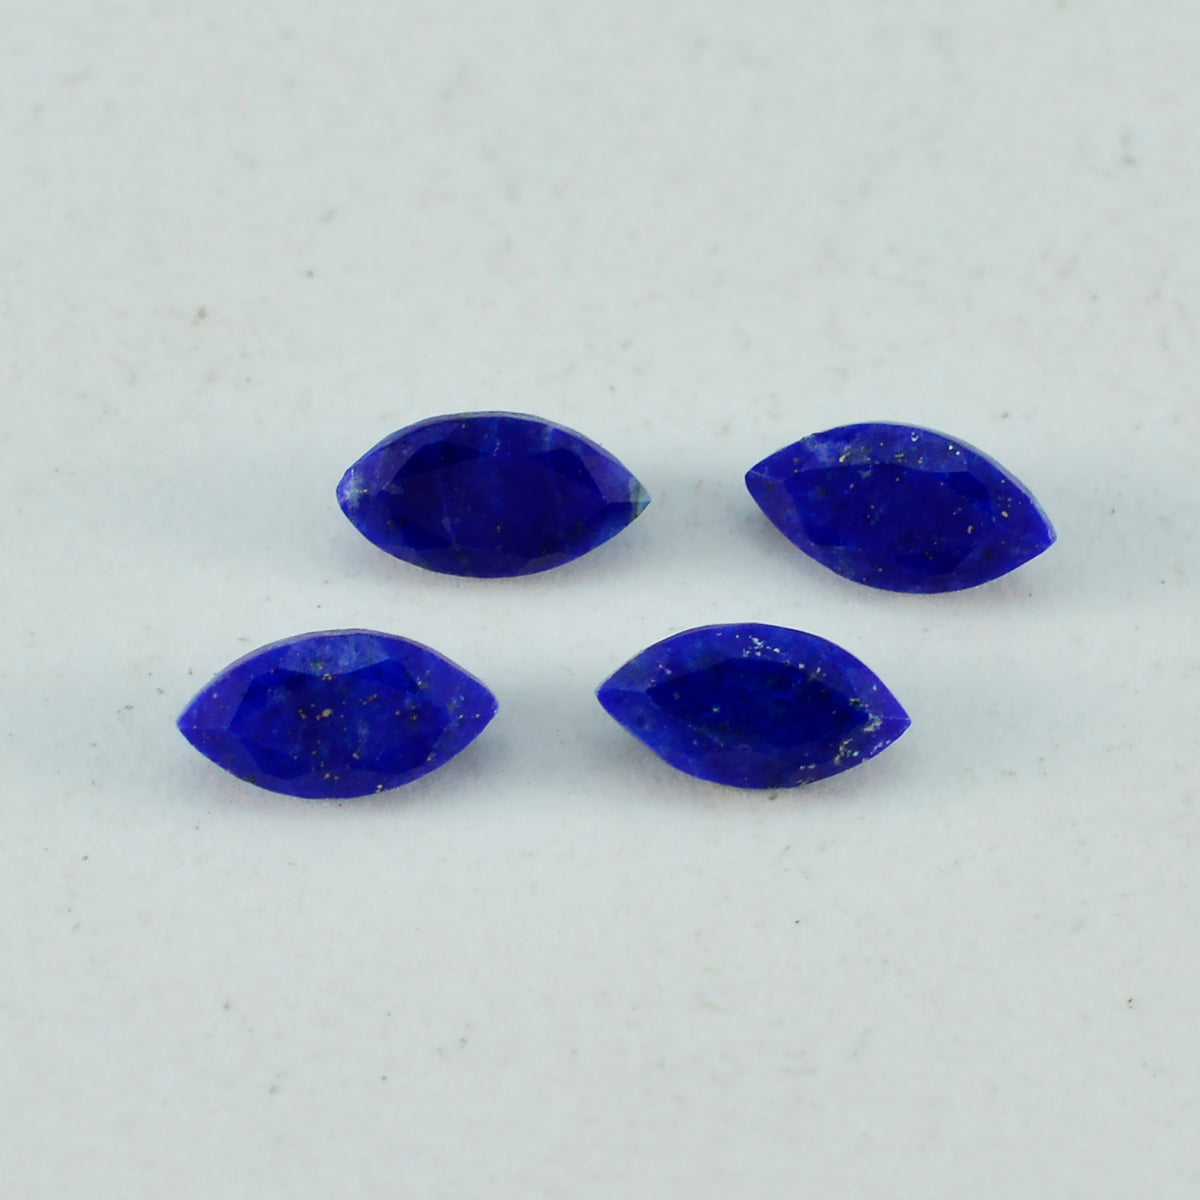 Riyogems 1PC Natuurlijke Blauwe Lapis Lazuli Facet 8x16 mm Marquise Vorm A1 Kwaliteit Edelsteen